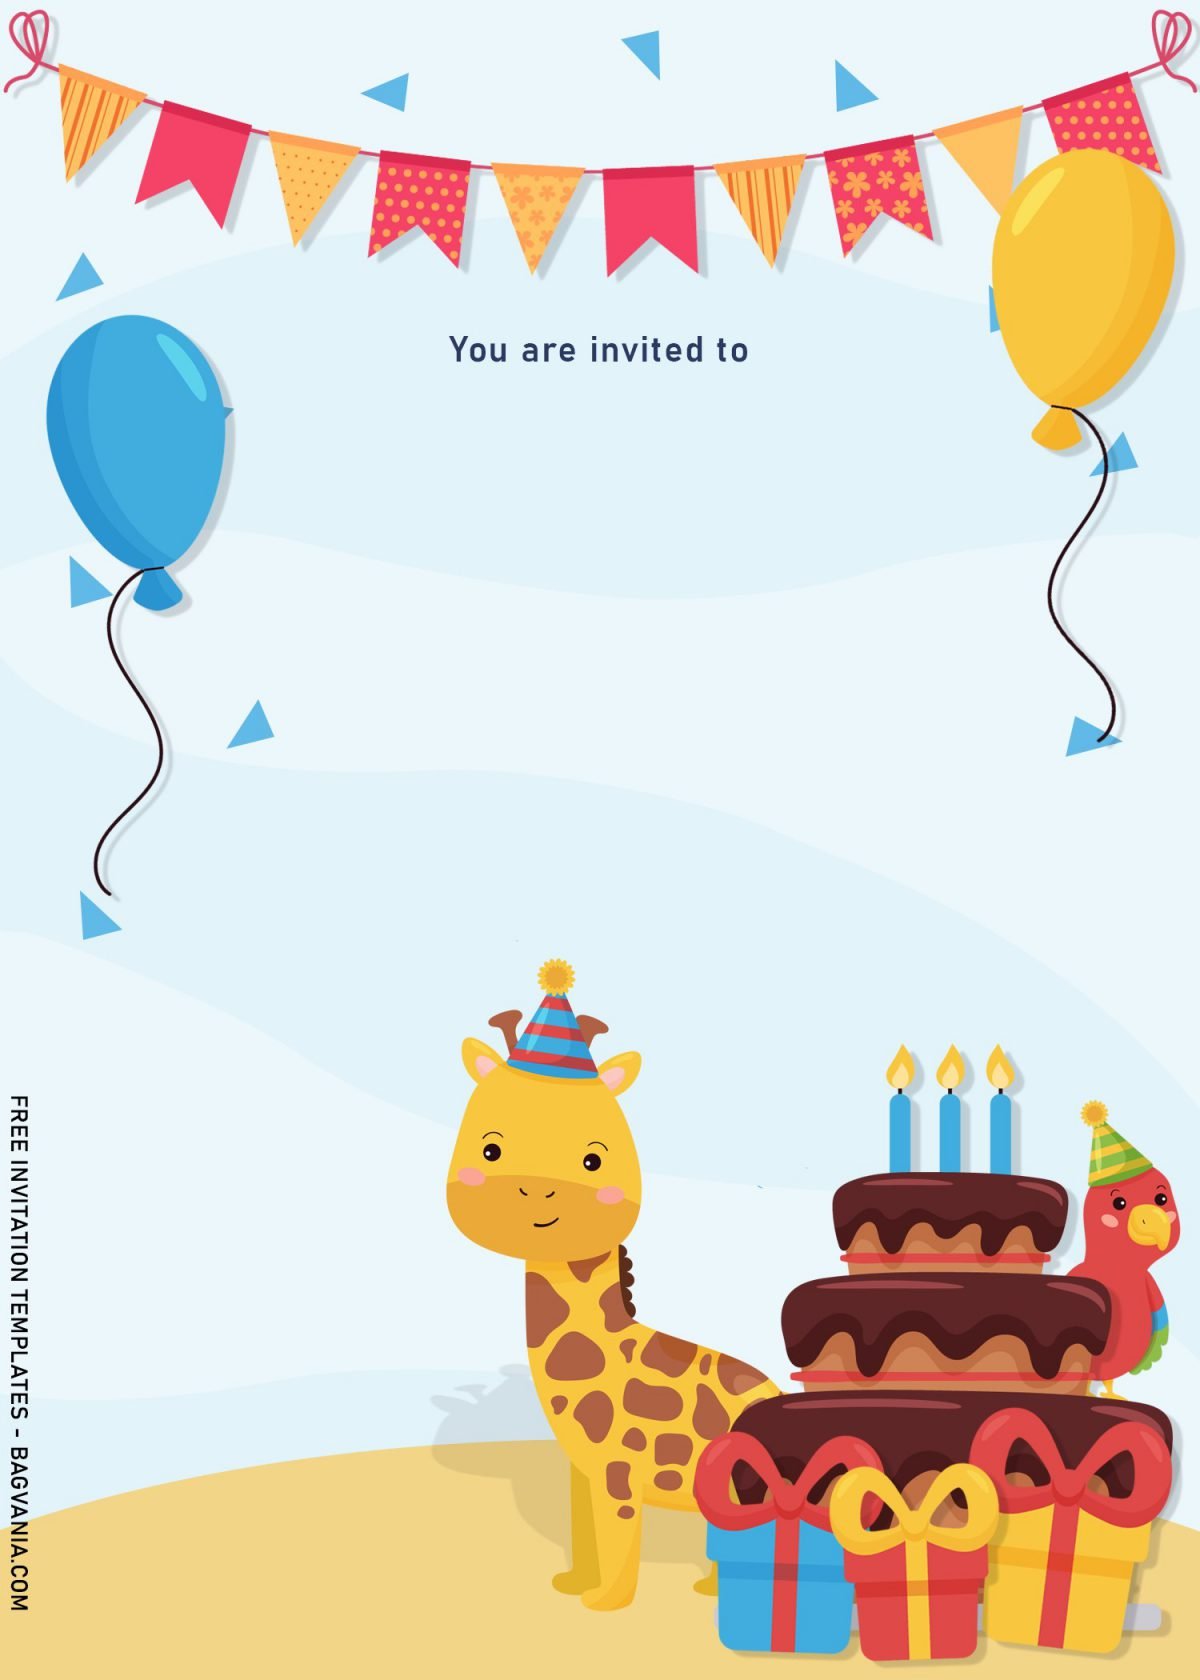 8+ Cute Woodland Animals Birthday Invitation Templates and has cute baby Giraffe